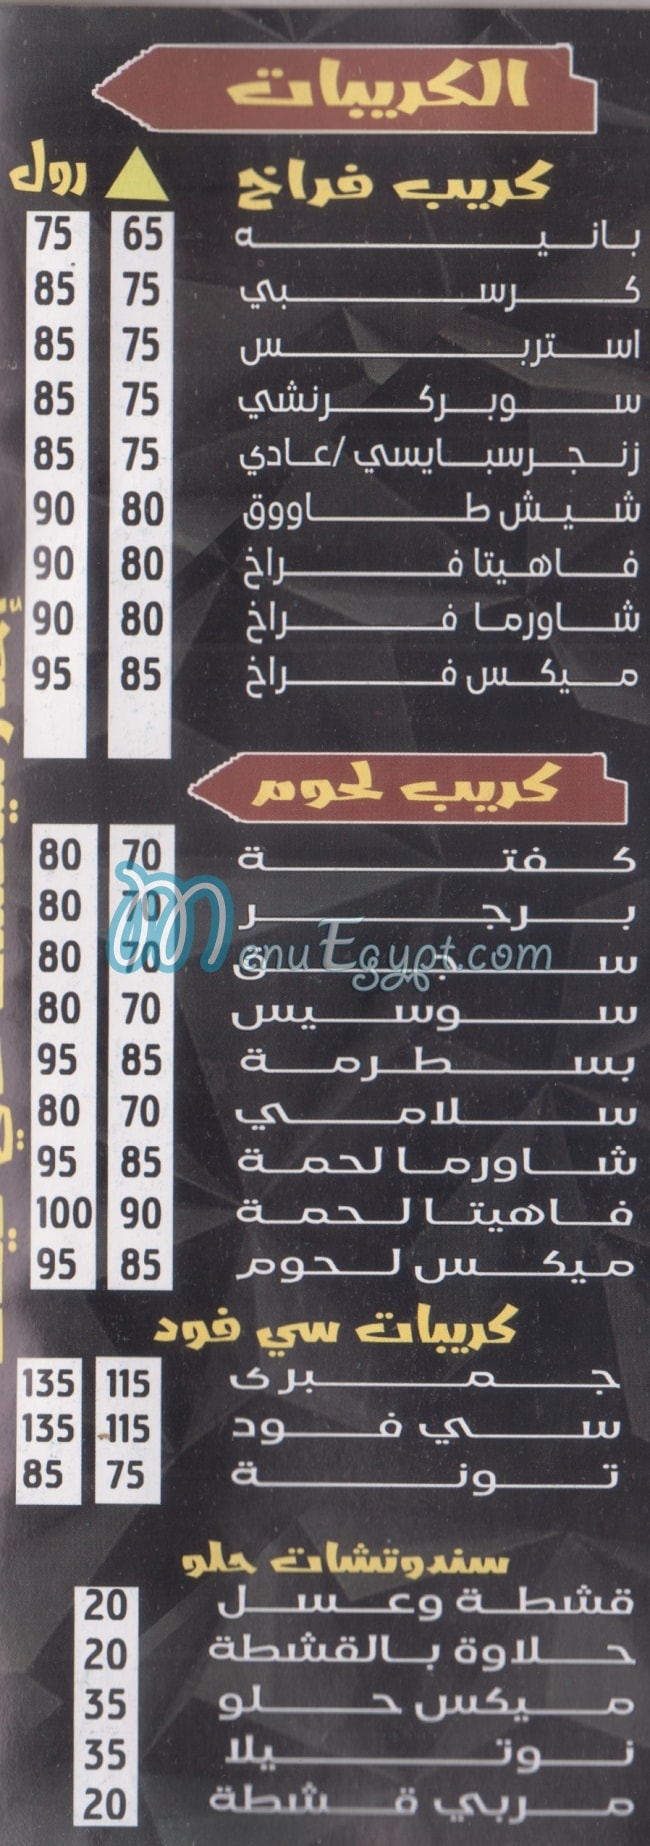 Al Sakhra menu Egypt